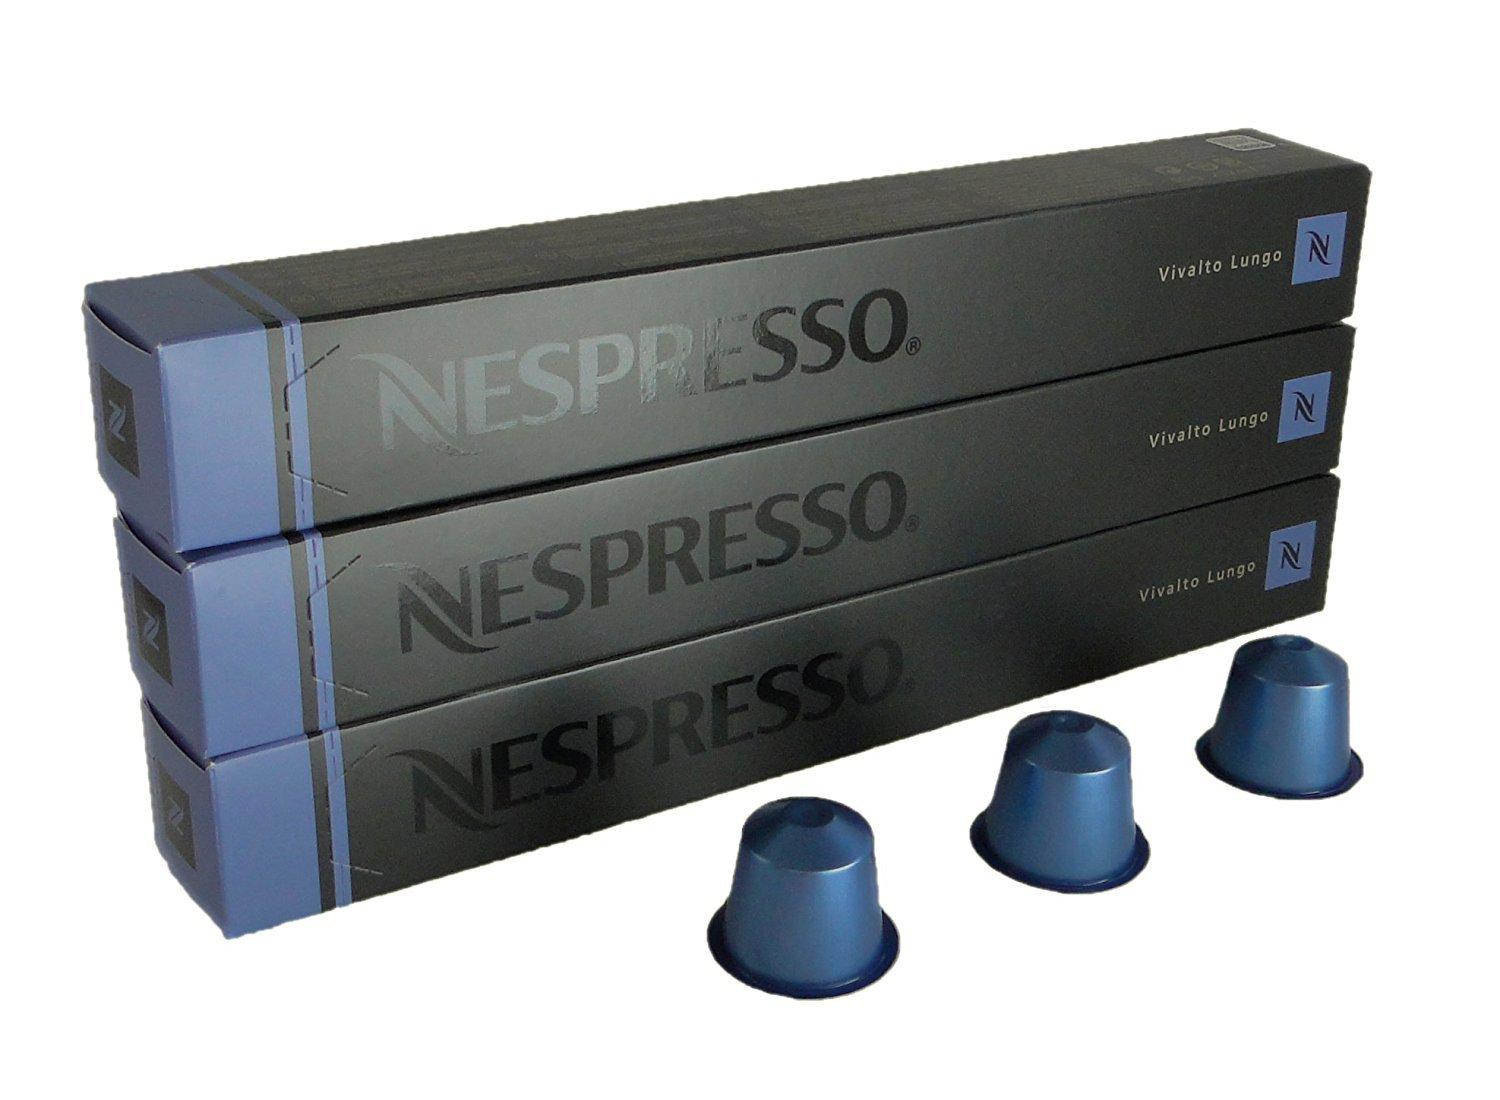 Nespresso TOKYO VIVALTO LUNGO Capsule Ground Coffee เนสเพรสโซ โตเกียว วีวอวโต ลุงโก แคปซูลกาแฟ 30 Capsules